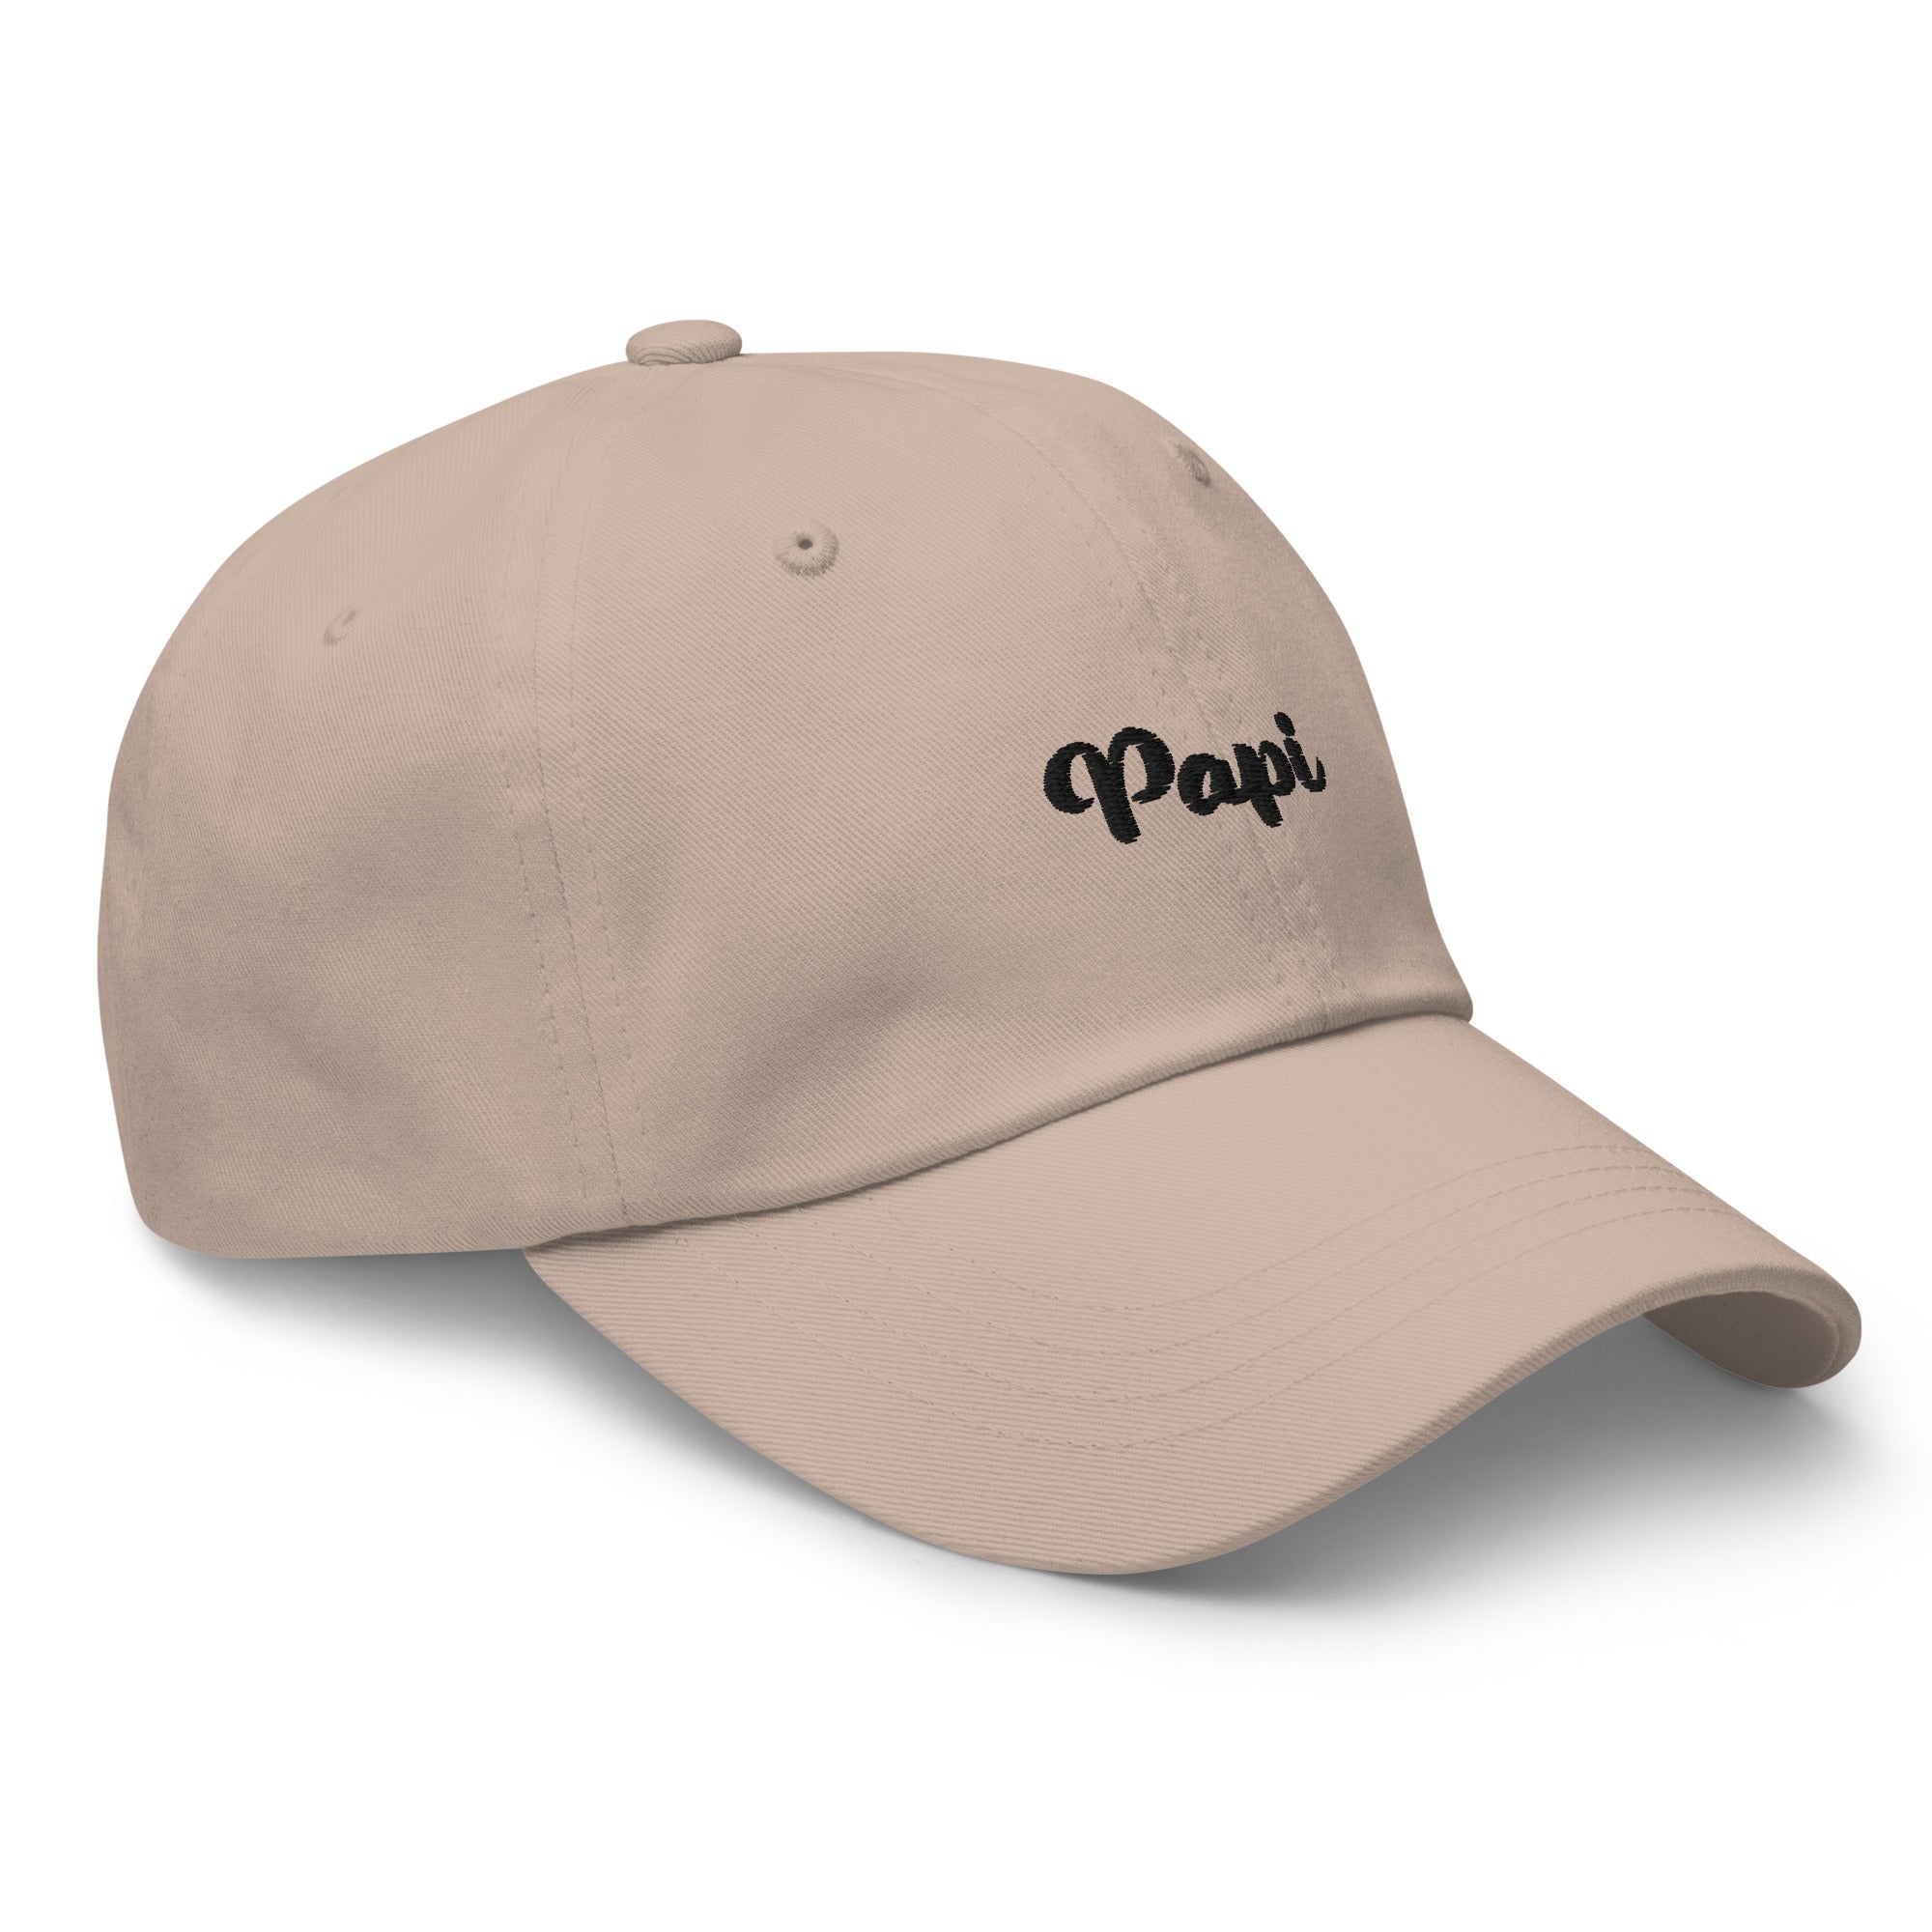 AGAD Summer 24 (Papi) hat